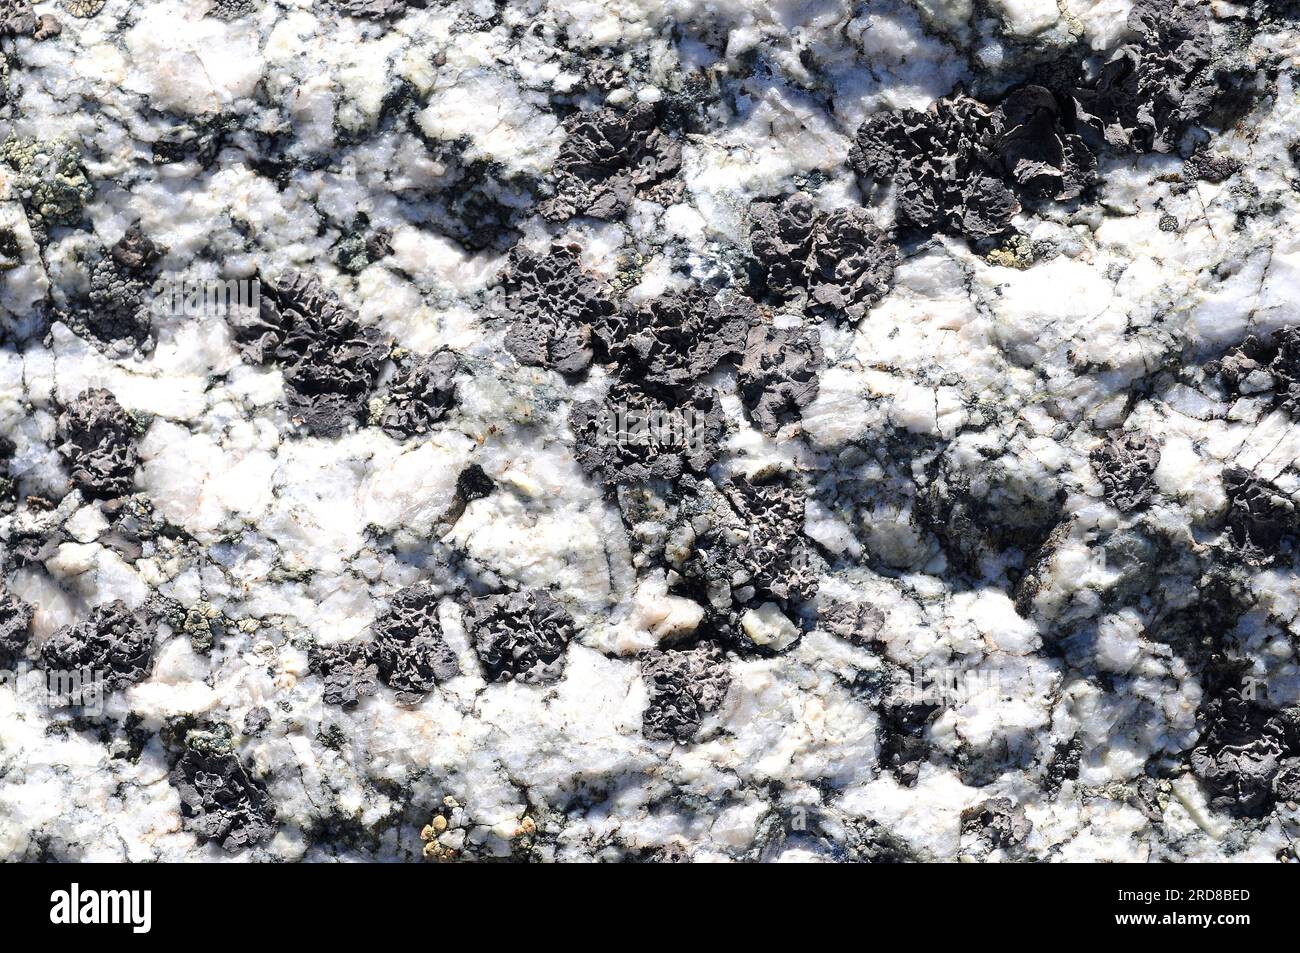 Rock tripe (Umbilicaria deusta) is an umbilicate or lobate lichen that grow on siliceous rocks. Ascomycota. Umbilicariaceae. This photo was taken in F Stock Photo